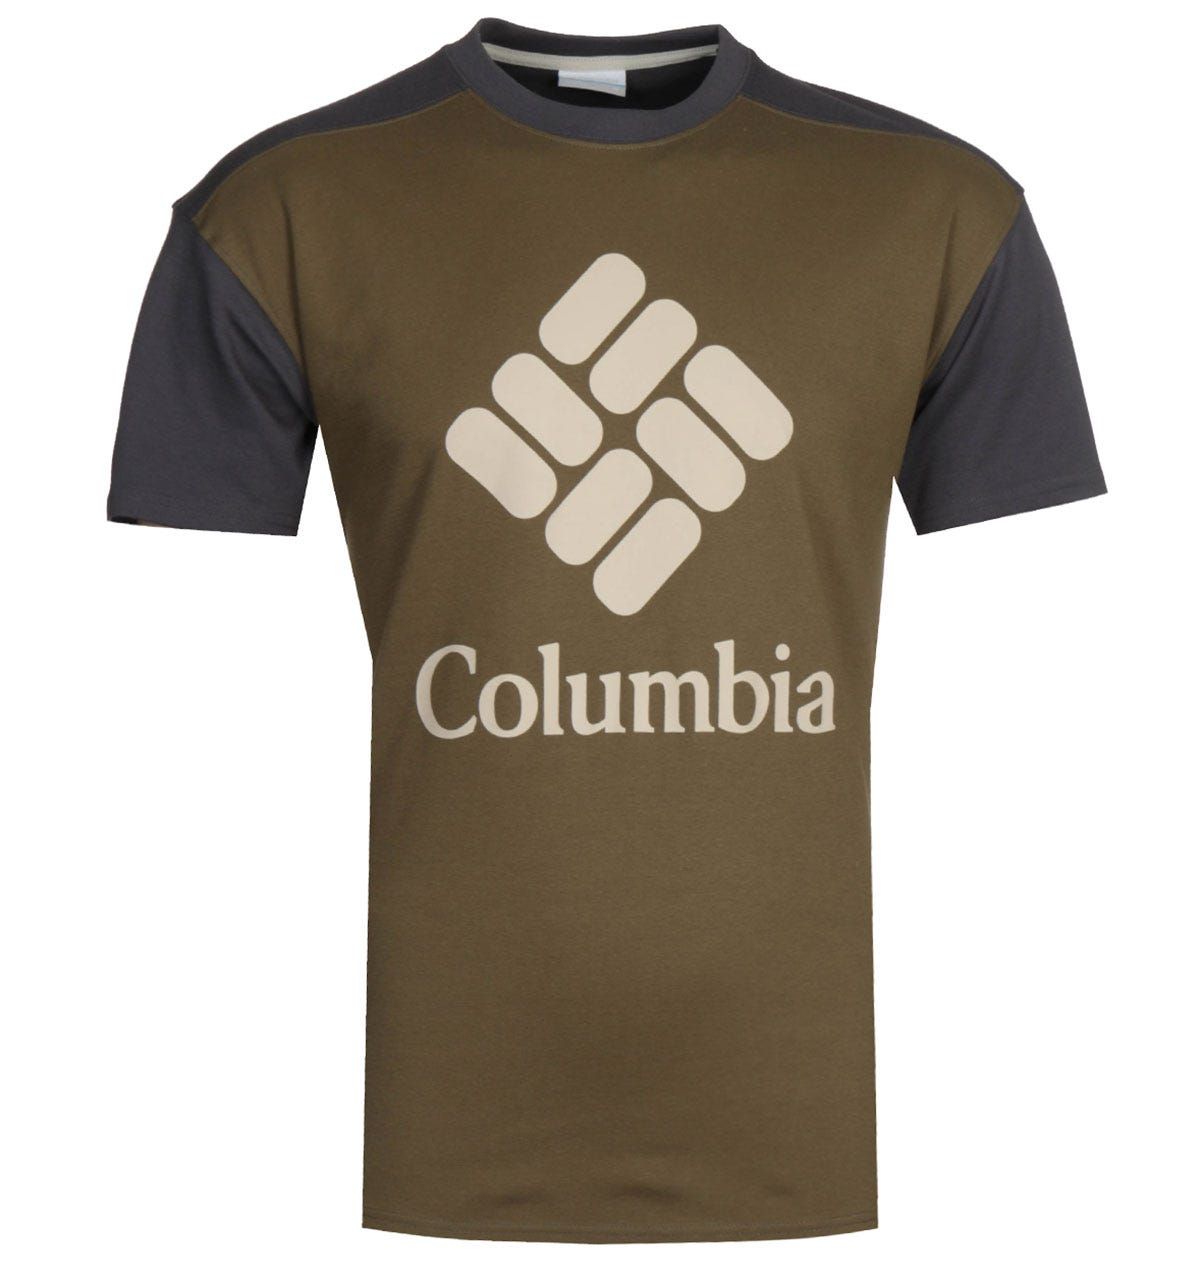 <p>A cool-season essential crafted by Columbia. The Columbia Lodge Green T-Shirt is a classic silhouette fitted with a crew neck and tonal stitching to give a vibrant touch. The design is finished with the Columbia logo printed on the chest.</p><ul><li>Cotton composition</li><li>Crew neck</li><li>Short sleeve</li><li>Ribbed trims</li><li>Tonal stitching throughout</li><li>Columbia logo printed on the chest</li></ul><p>Style & Fit:</p><ul><li>Regular fit</li><li>Fits true to size</li></ul><p>Fabric Composition & Care:</p><ul><li>100% Cotton</li><li>Machine wash</li></ul>